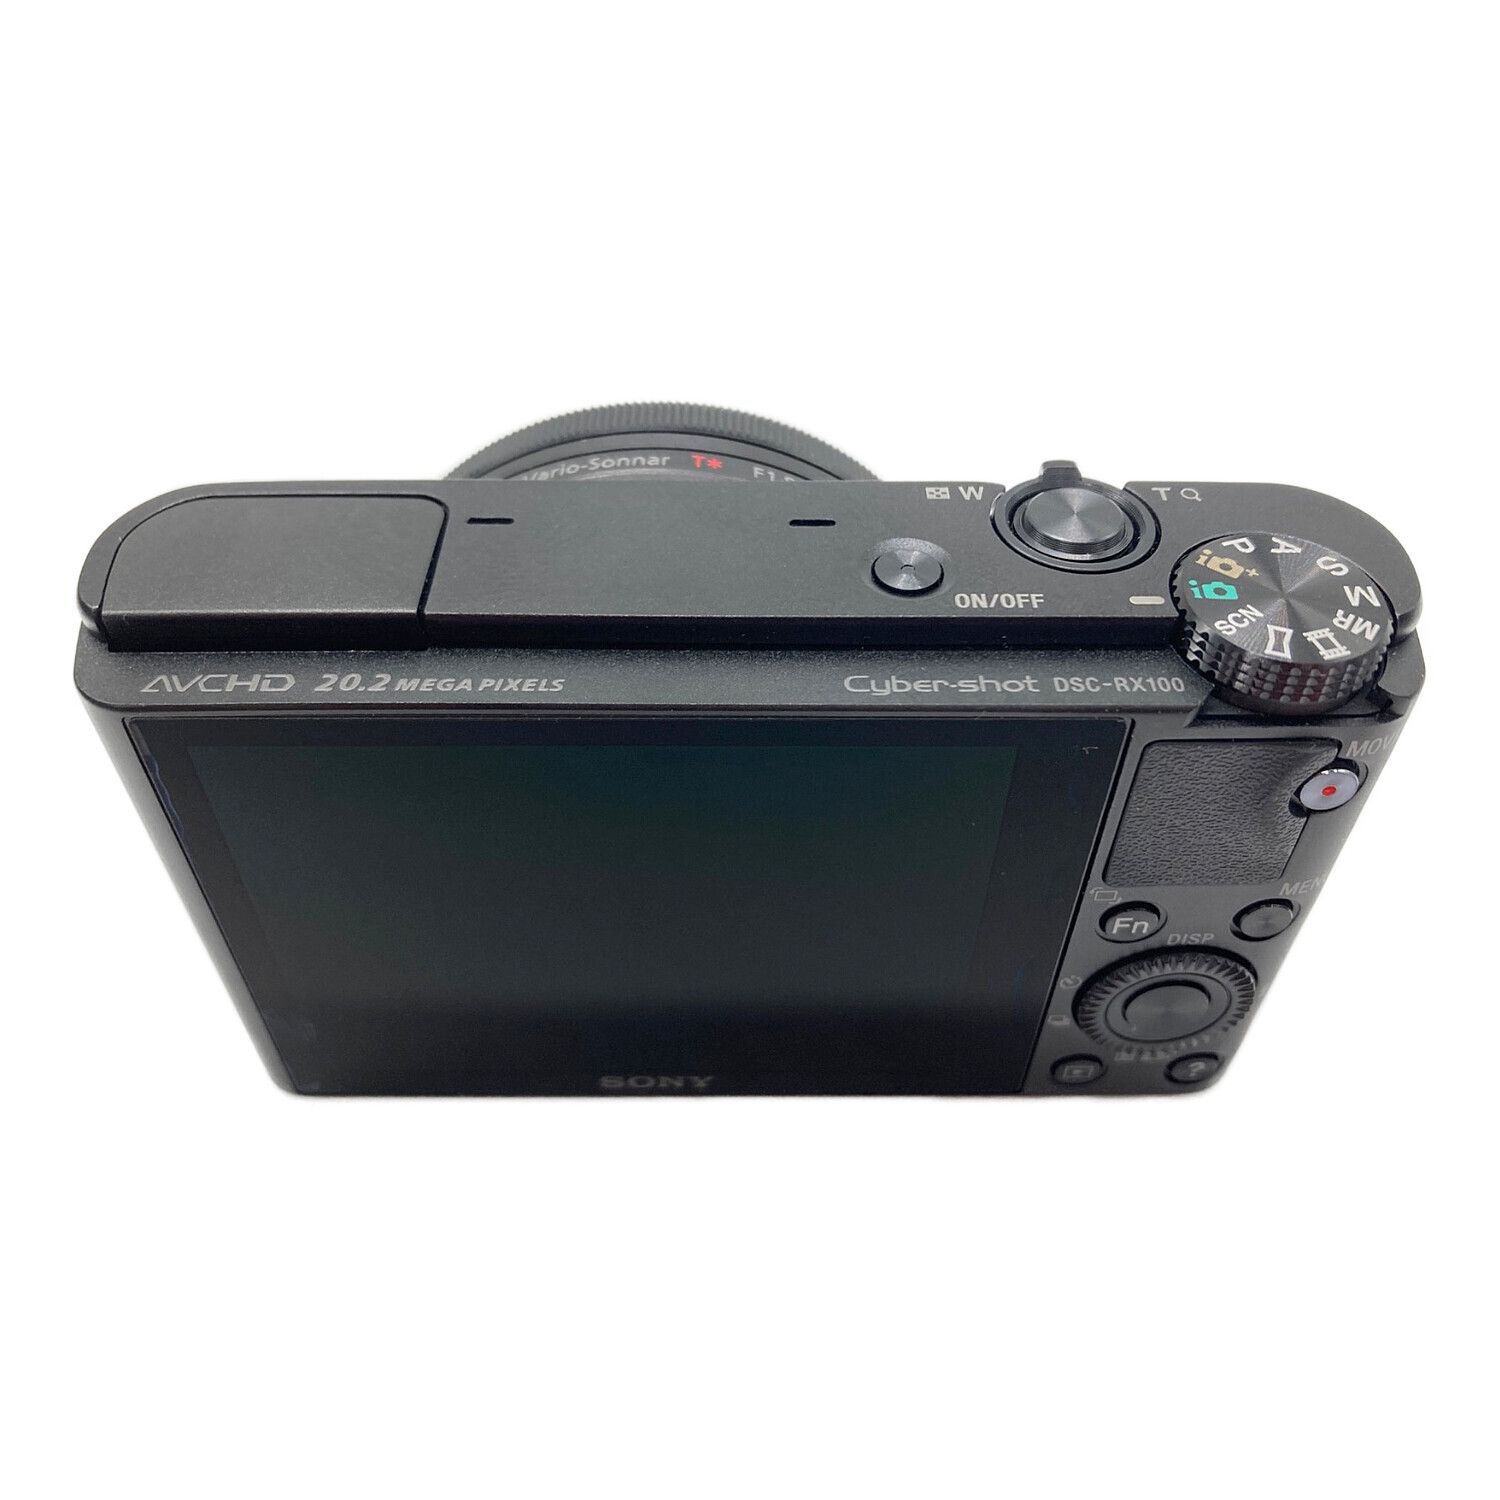 SONY (ソニー) コンパクトデジタルカメラ CyberShot DSC-RX100 2020万